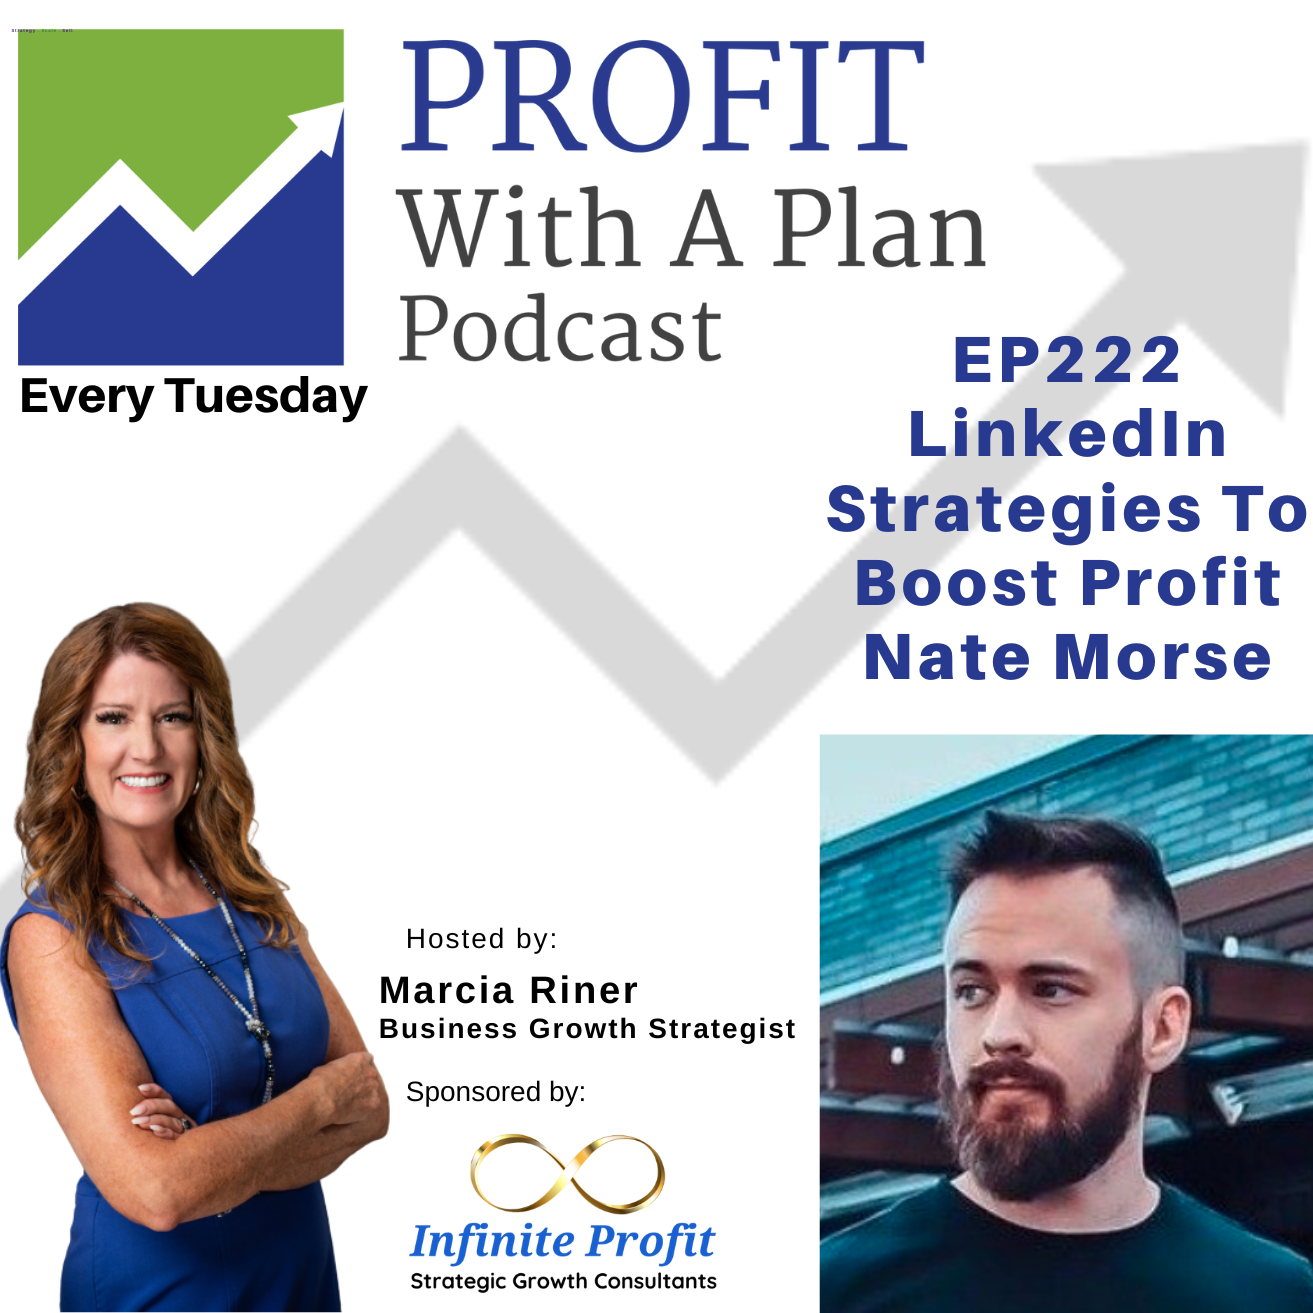 EP222 LinkedIn Strategiest To Boost Profit.  Nate Morse